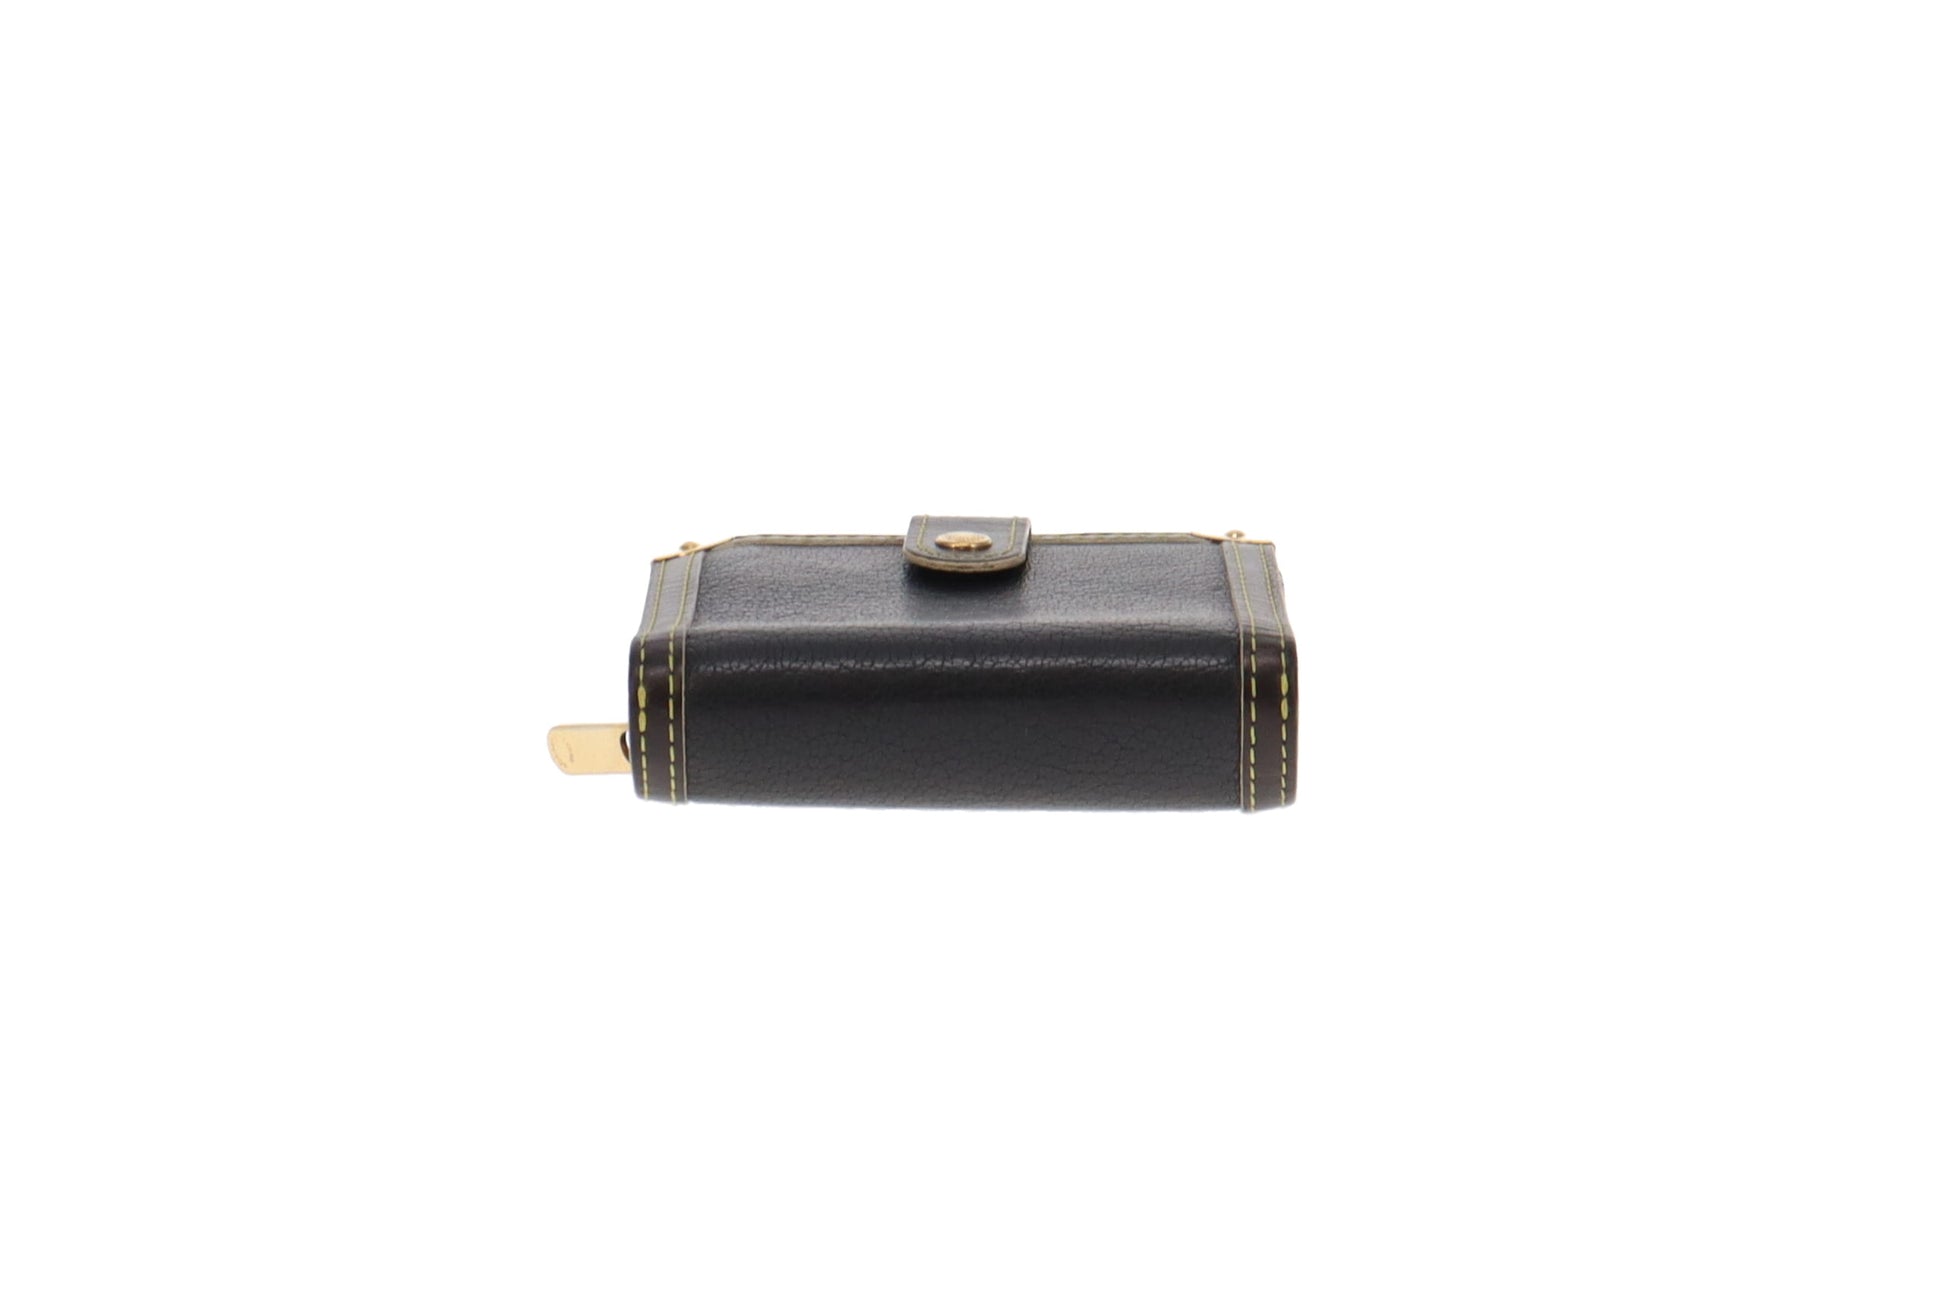 Louis Vuitton Black Suhali Compact Wallet MI0016